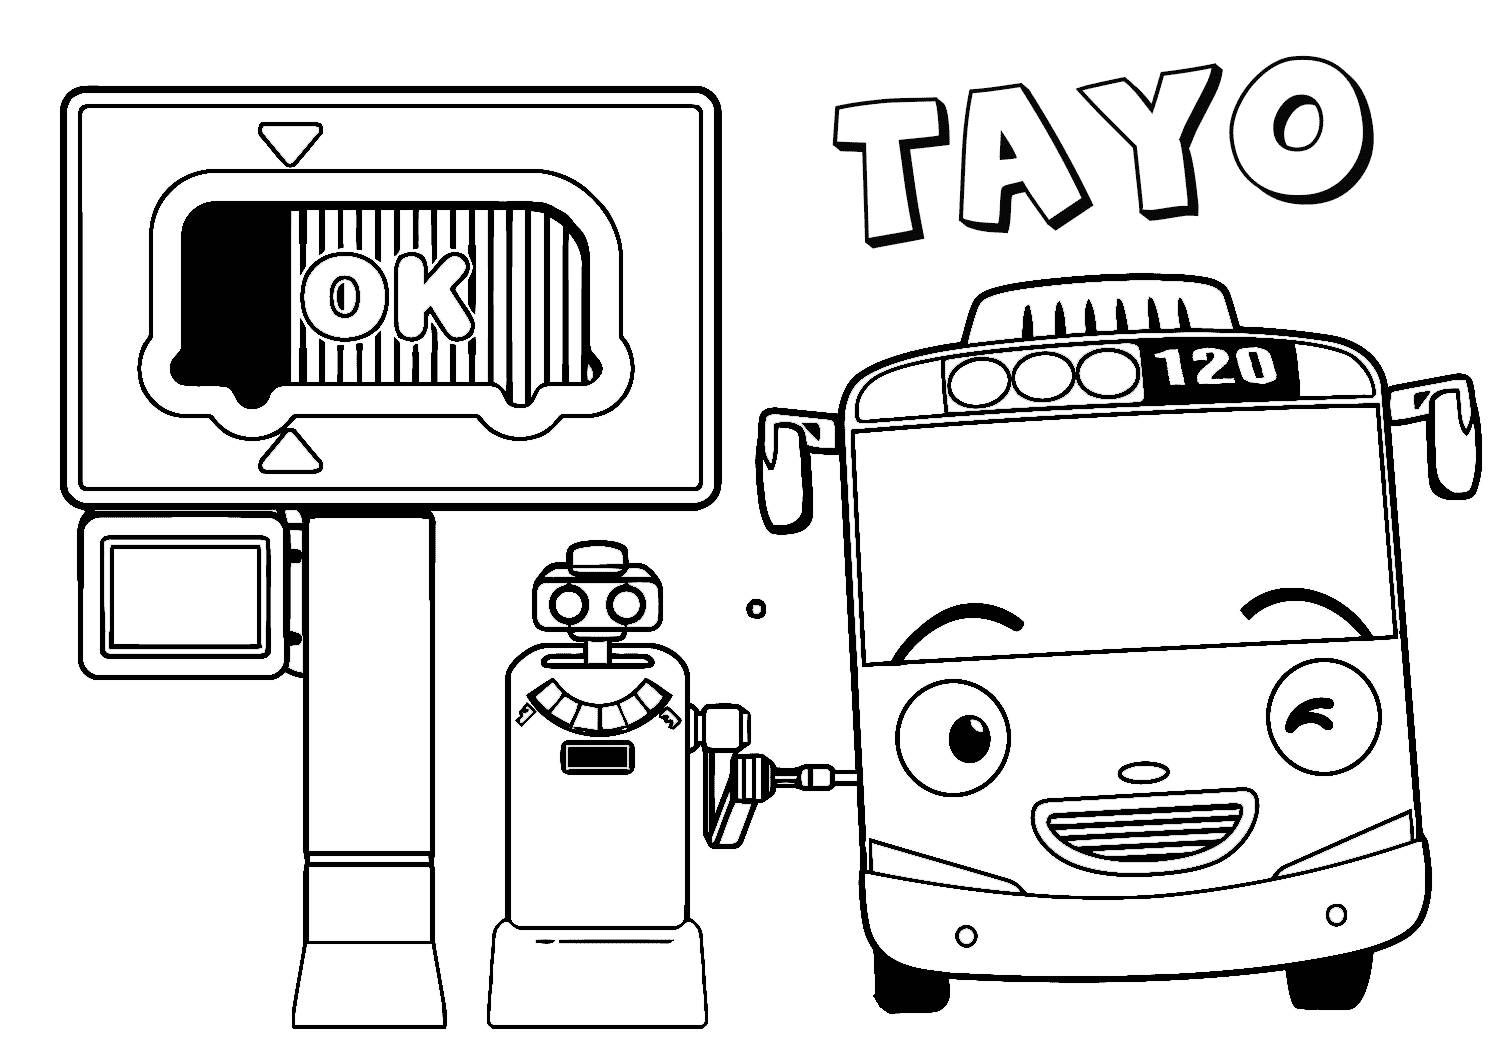 Tayo at the gas station